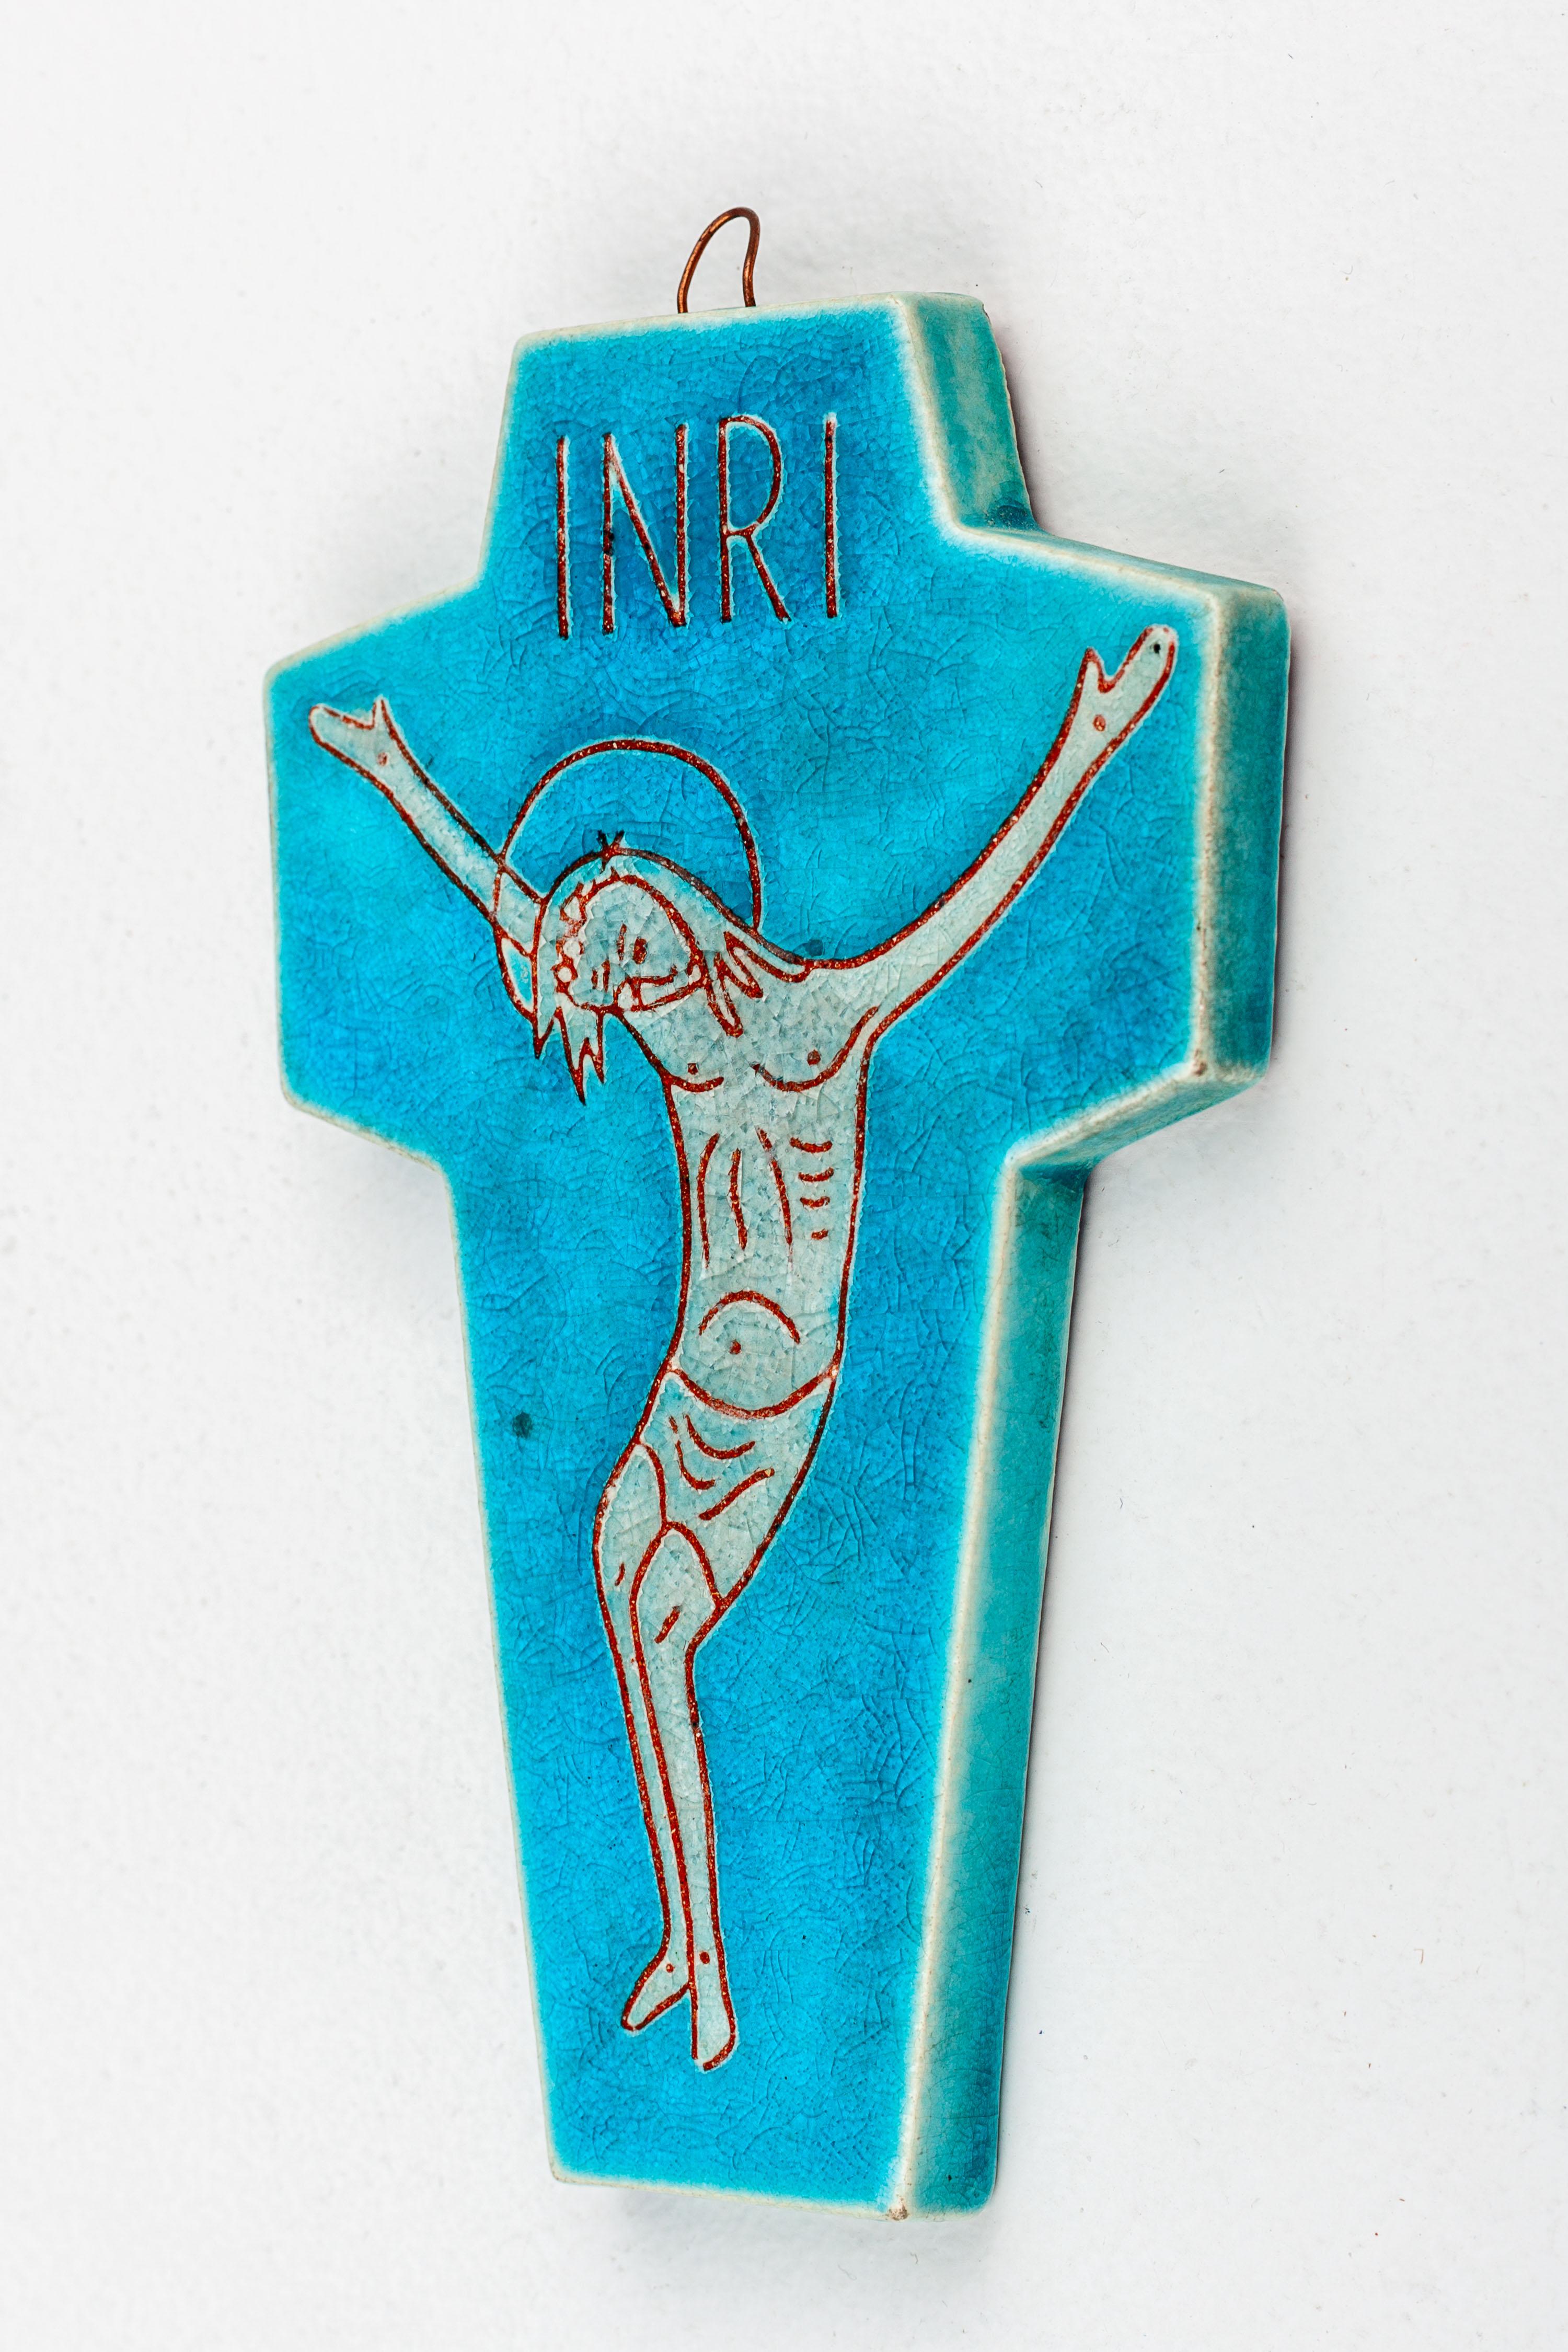 Mid-Century Modern Midcentury Blue & Green Ceramic Wall Cross, Jesus INRI, Handmade in Europe For Sale